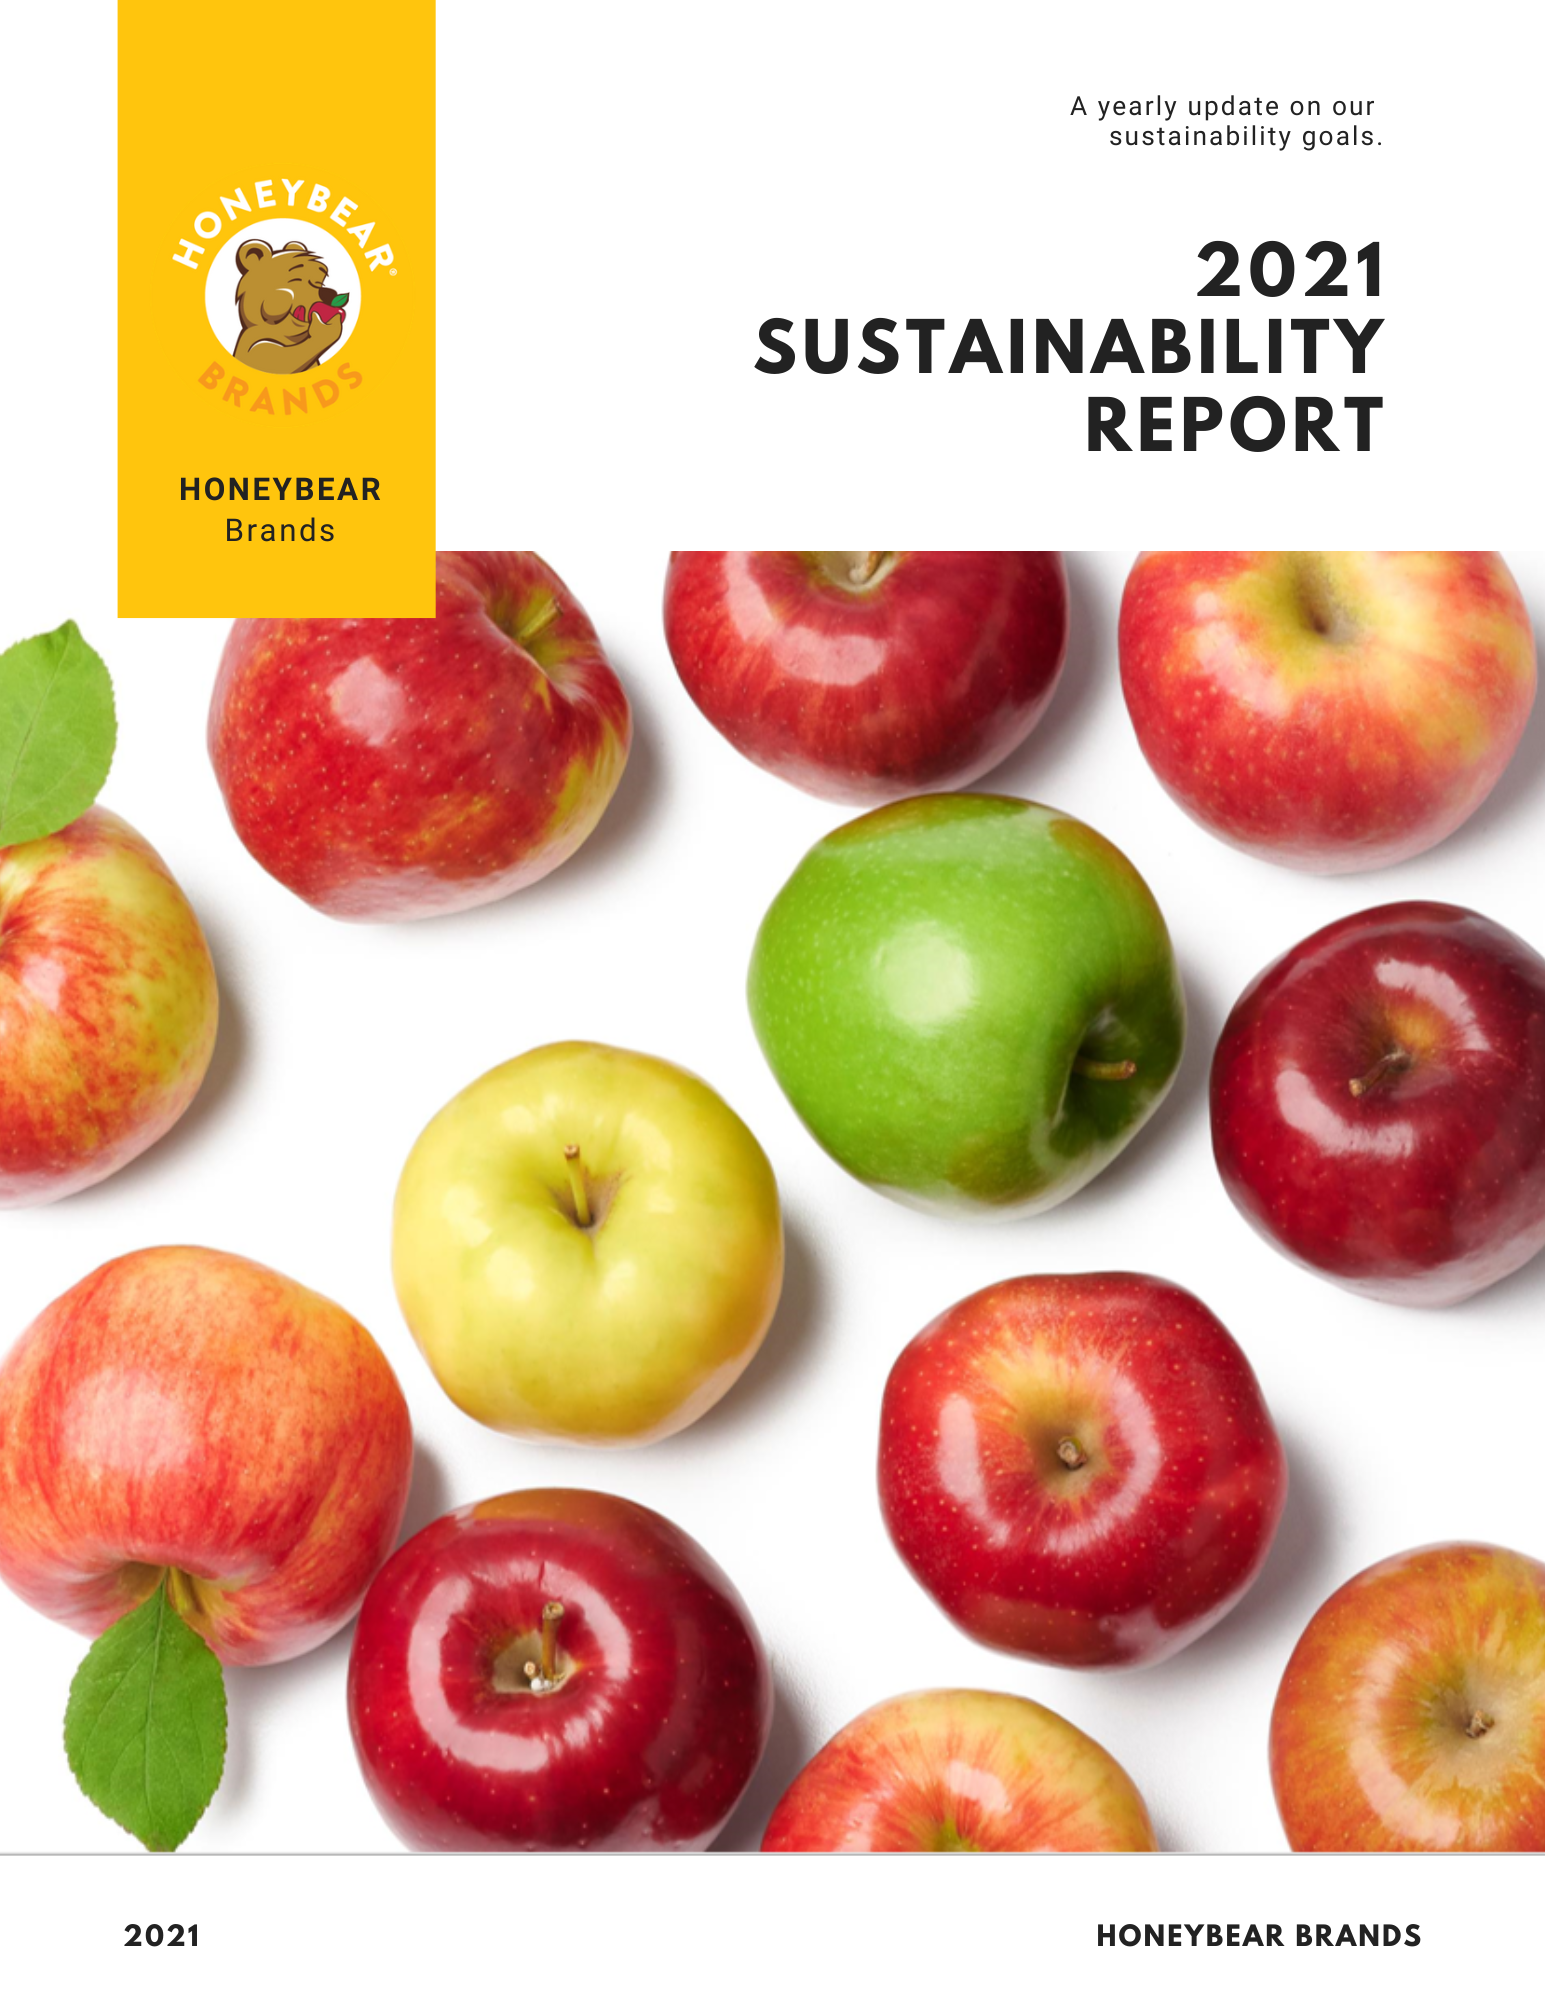 "Honeybear Brands, 2021 Sustainability Report"